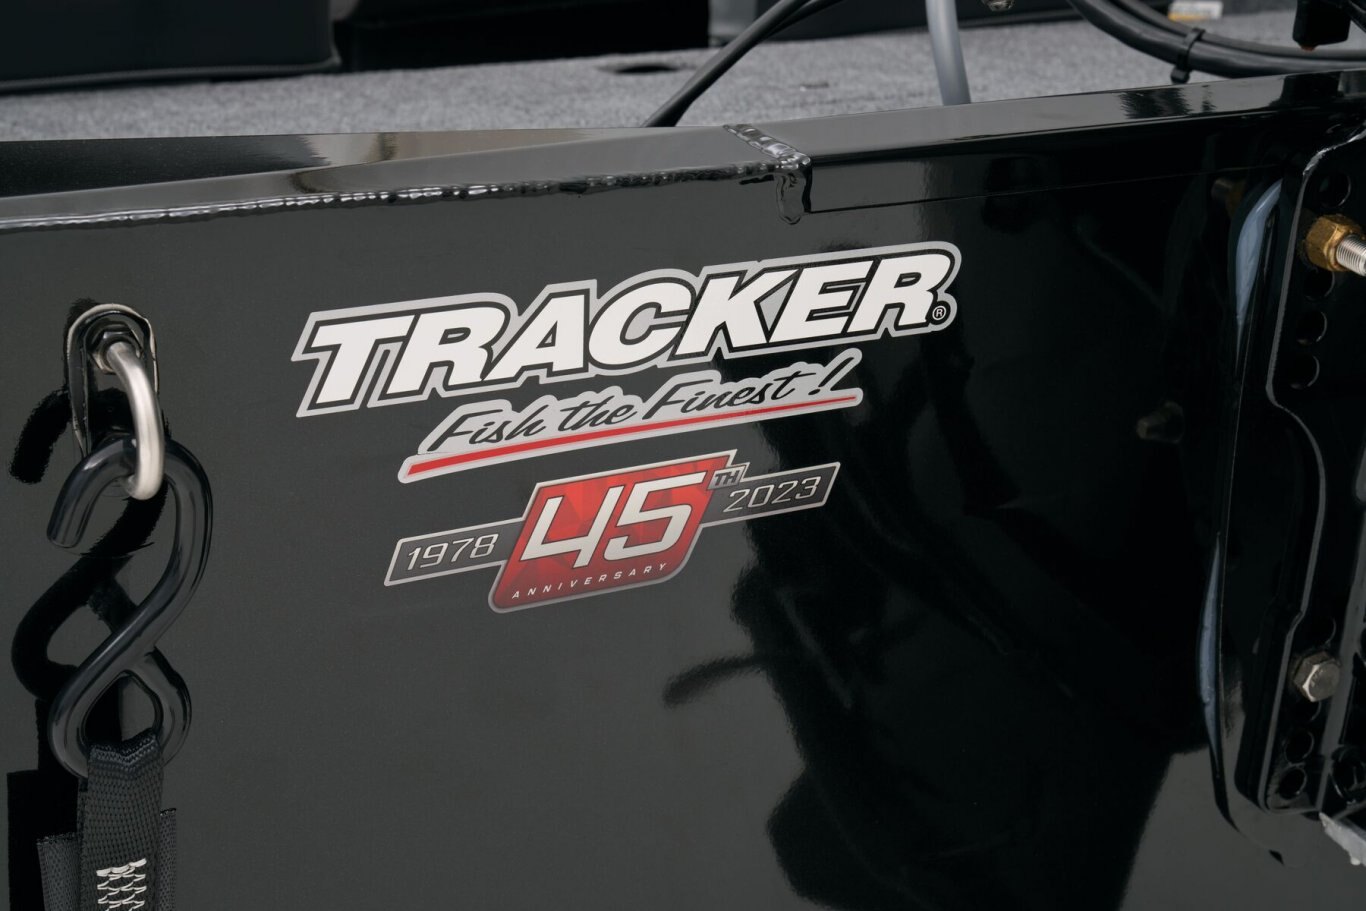 2023 Tracker PRO 170